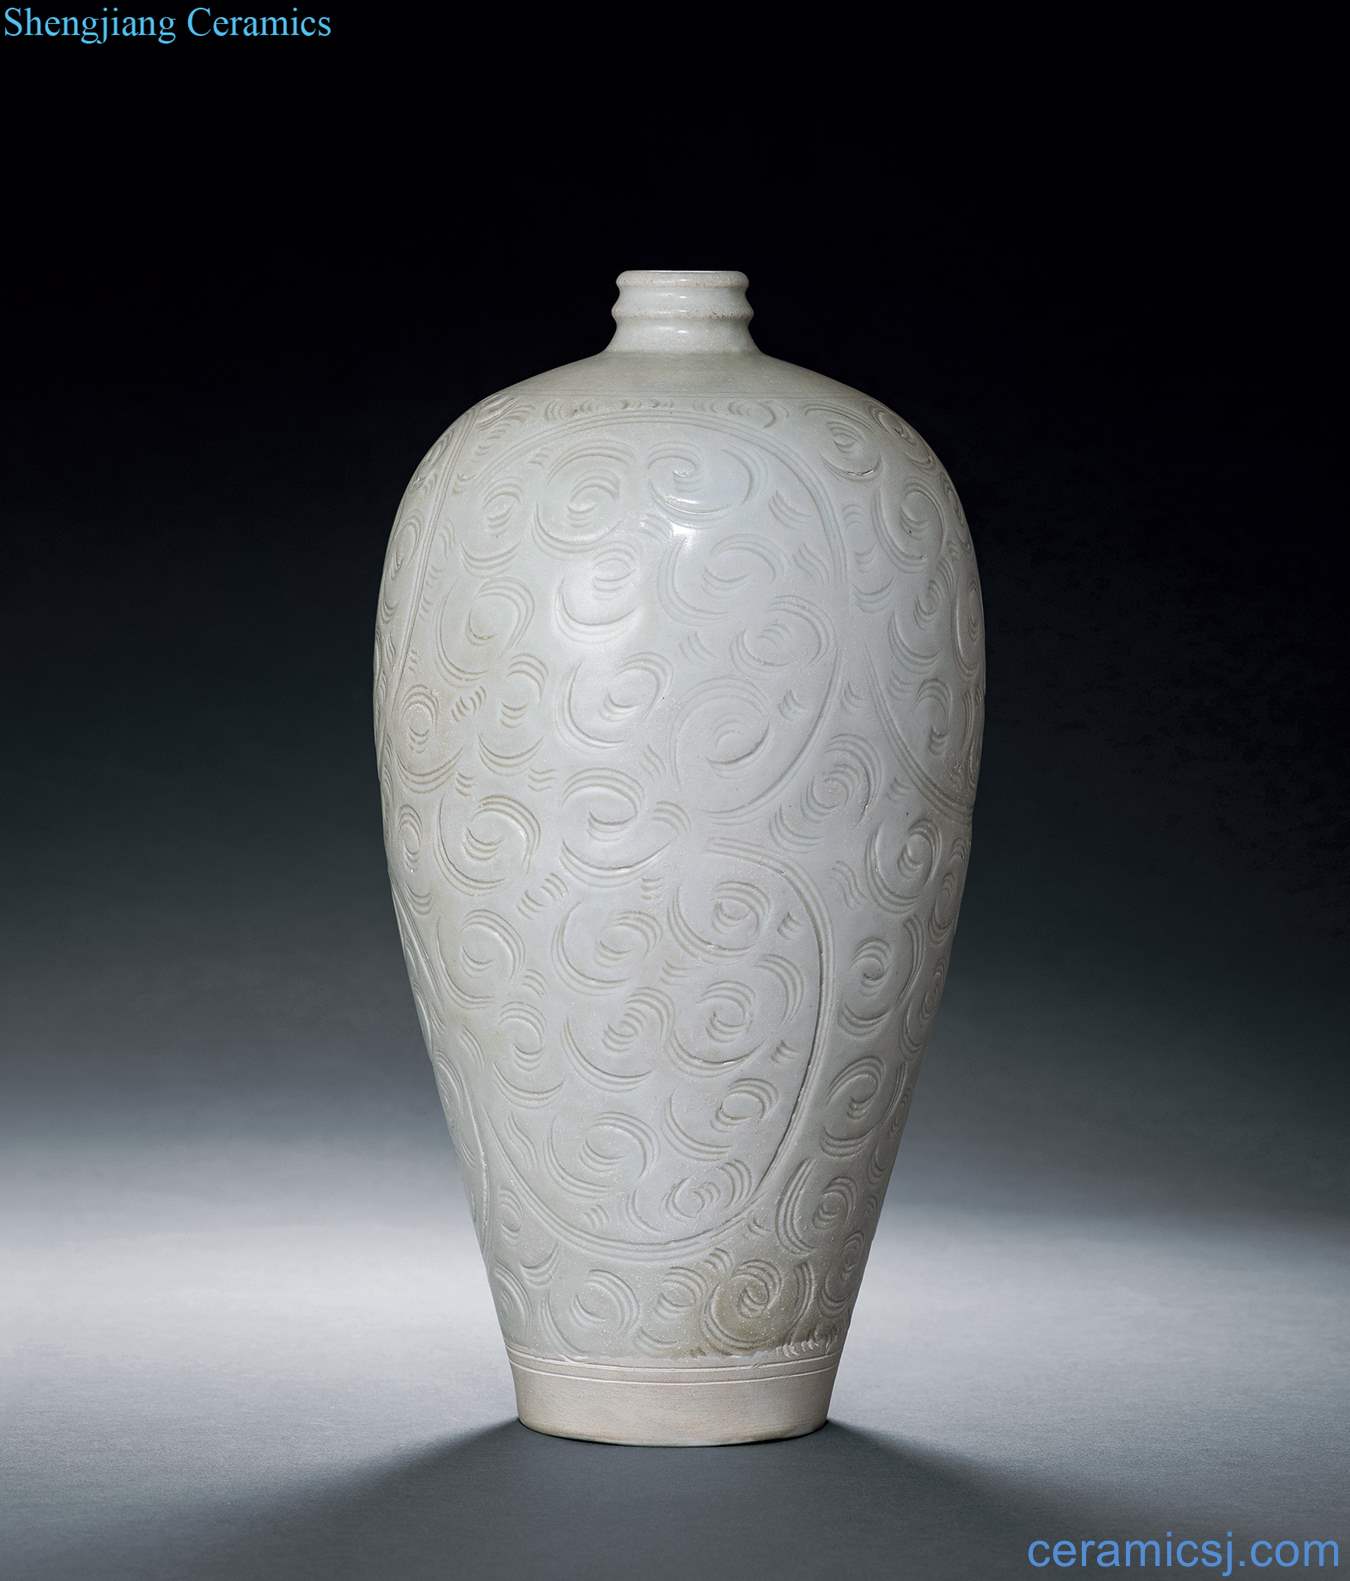 The southern song dynasty Left kiln green plum bottle white glazed carved decorative pattern